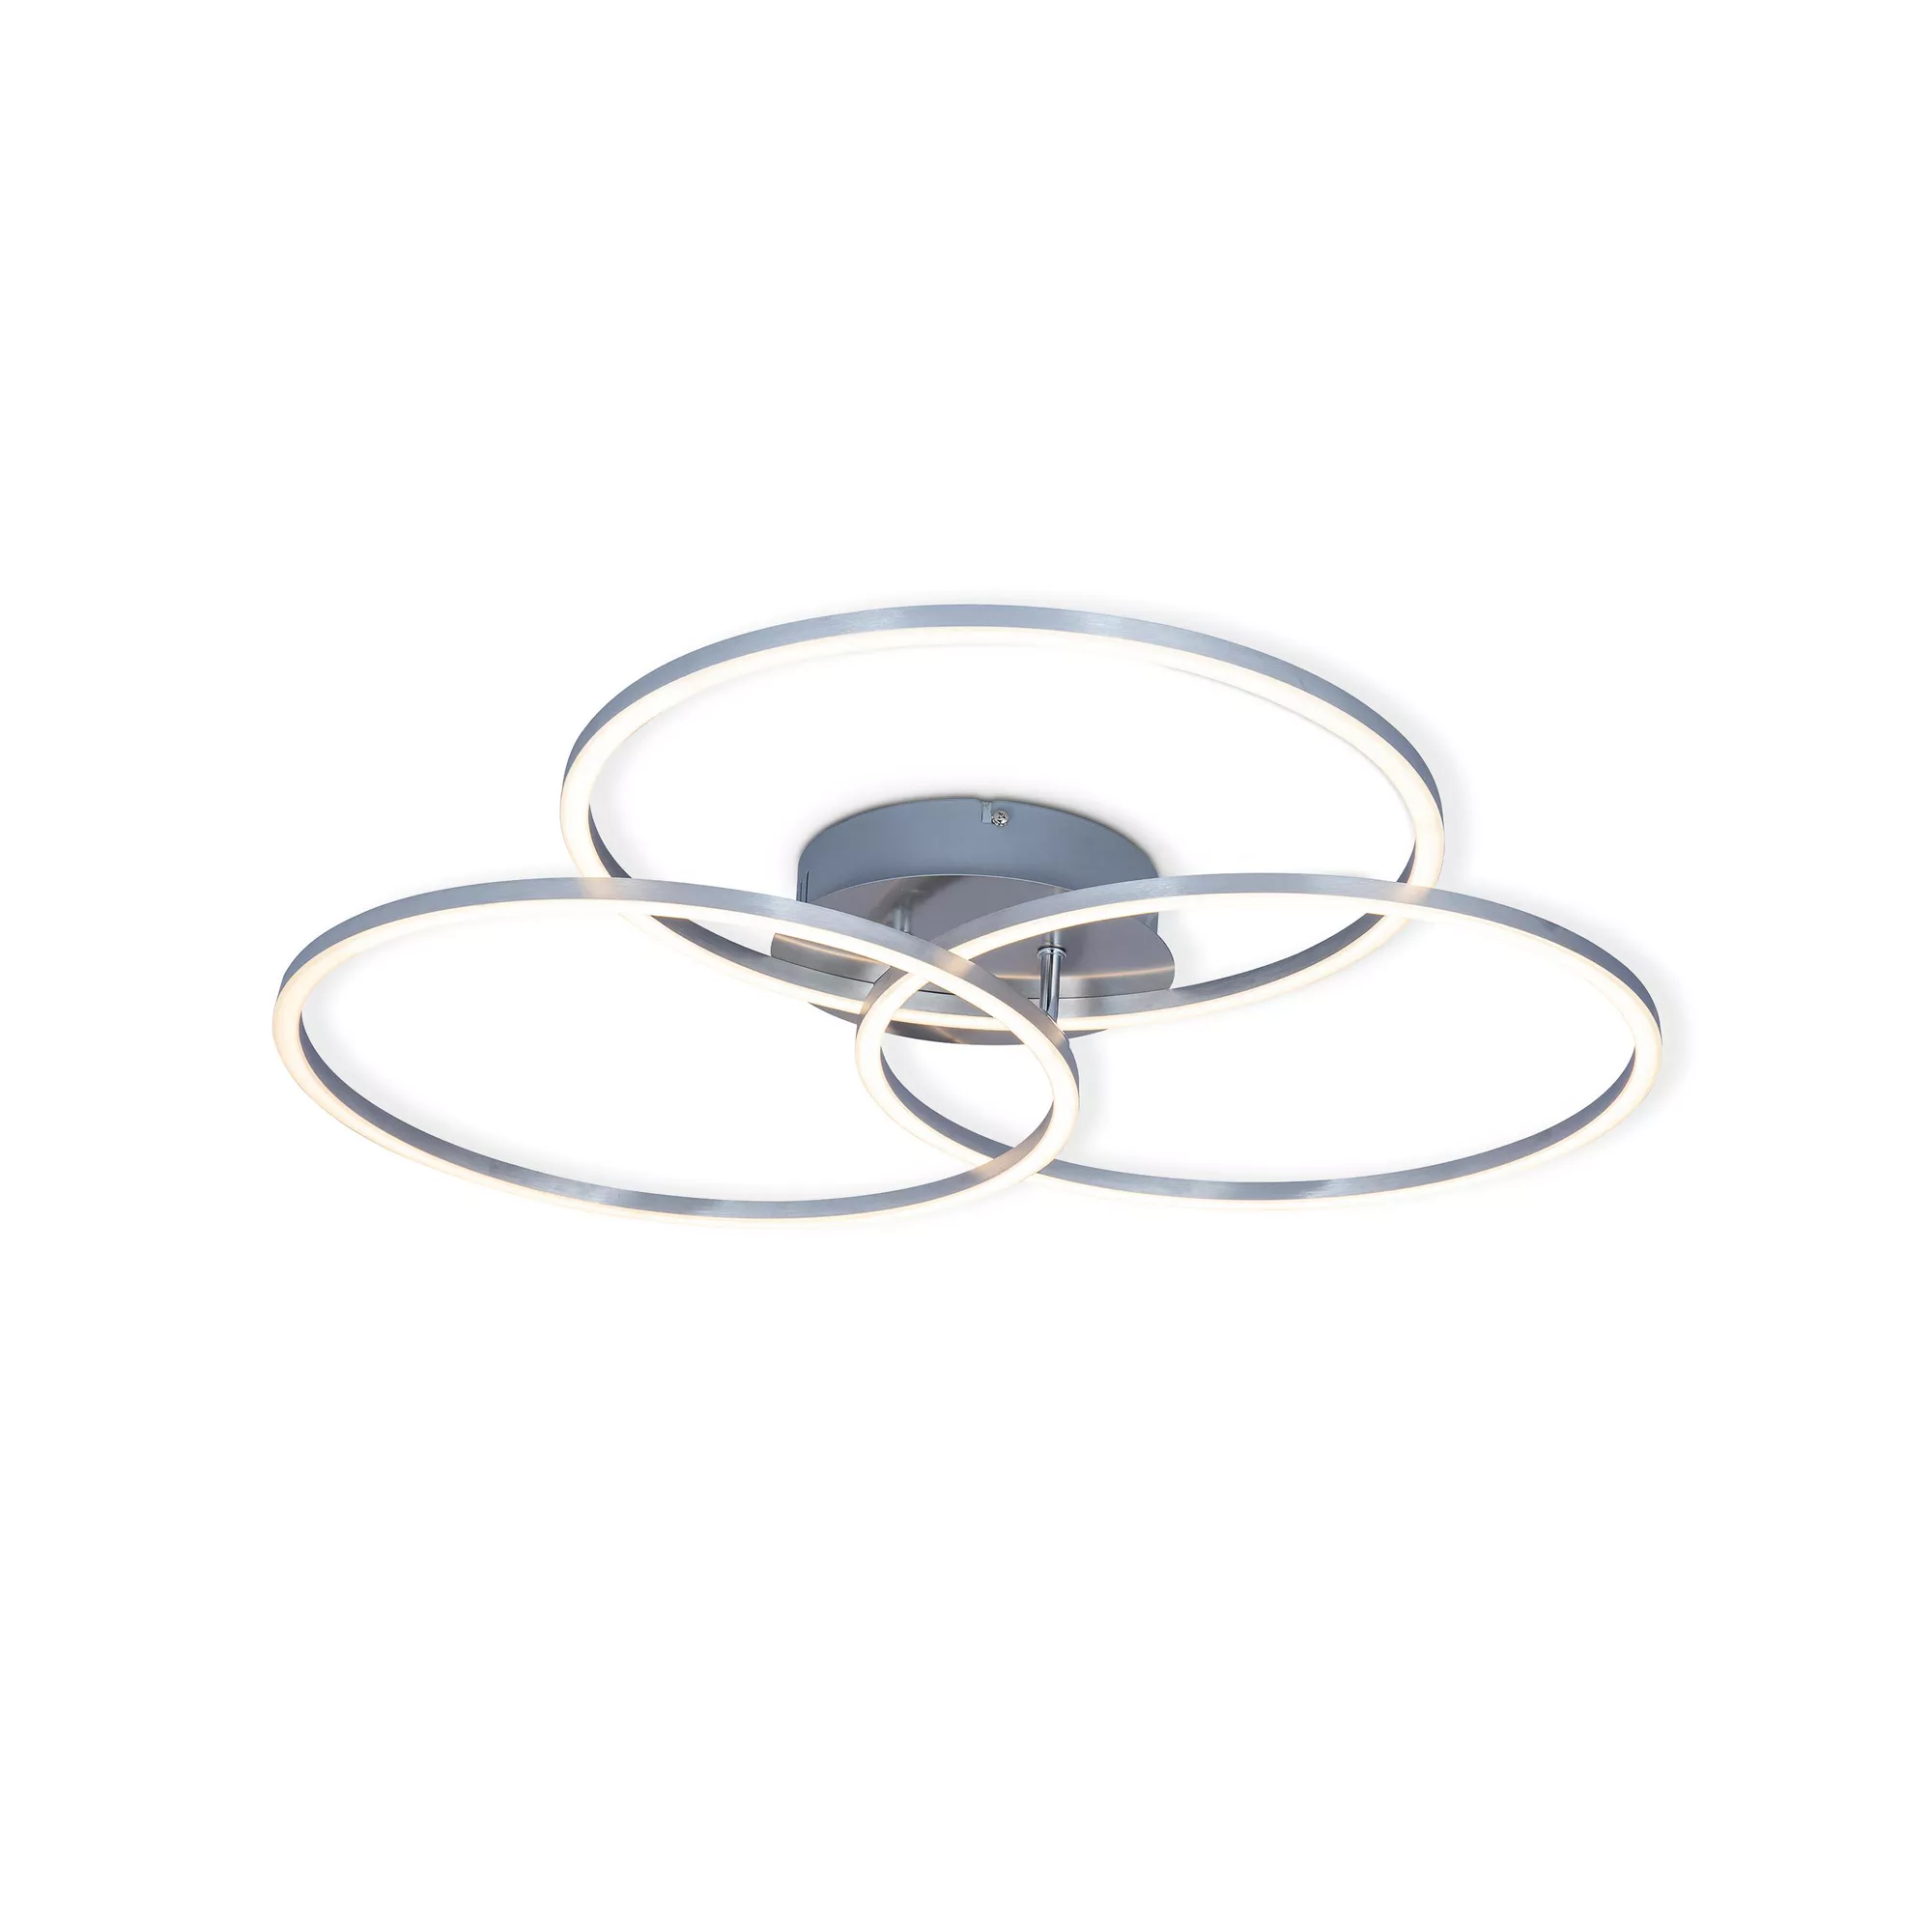 LED-Deckenleuchte 'Circle' silbern Aluminium, Kunststoff drei Ringe